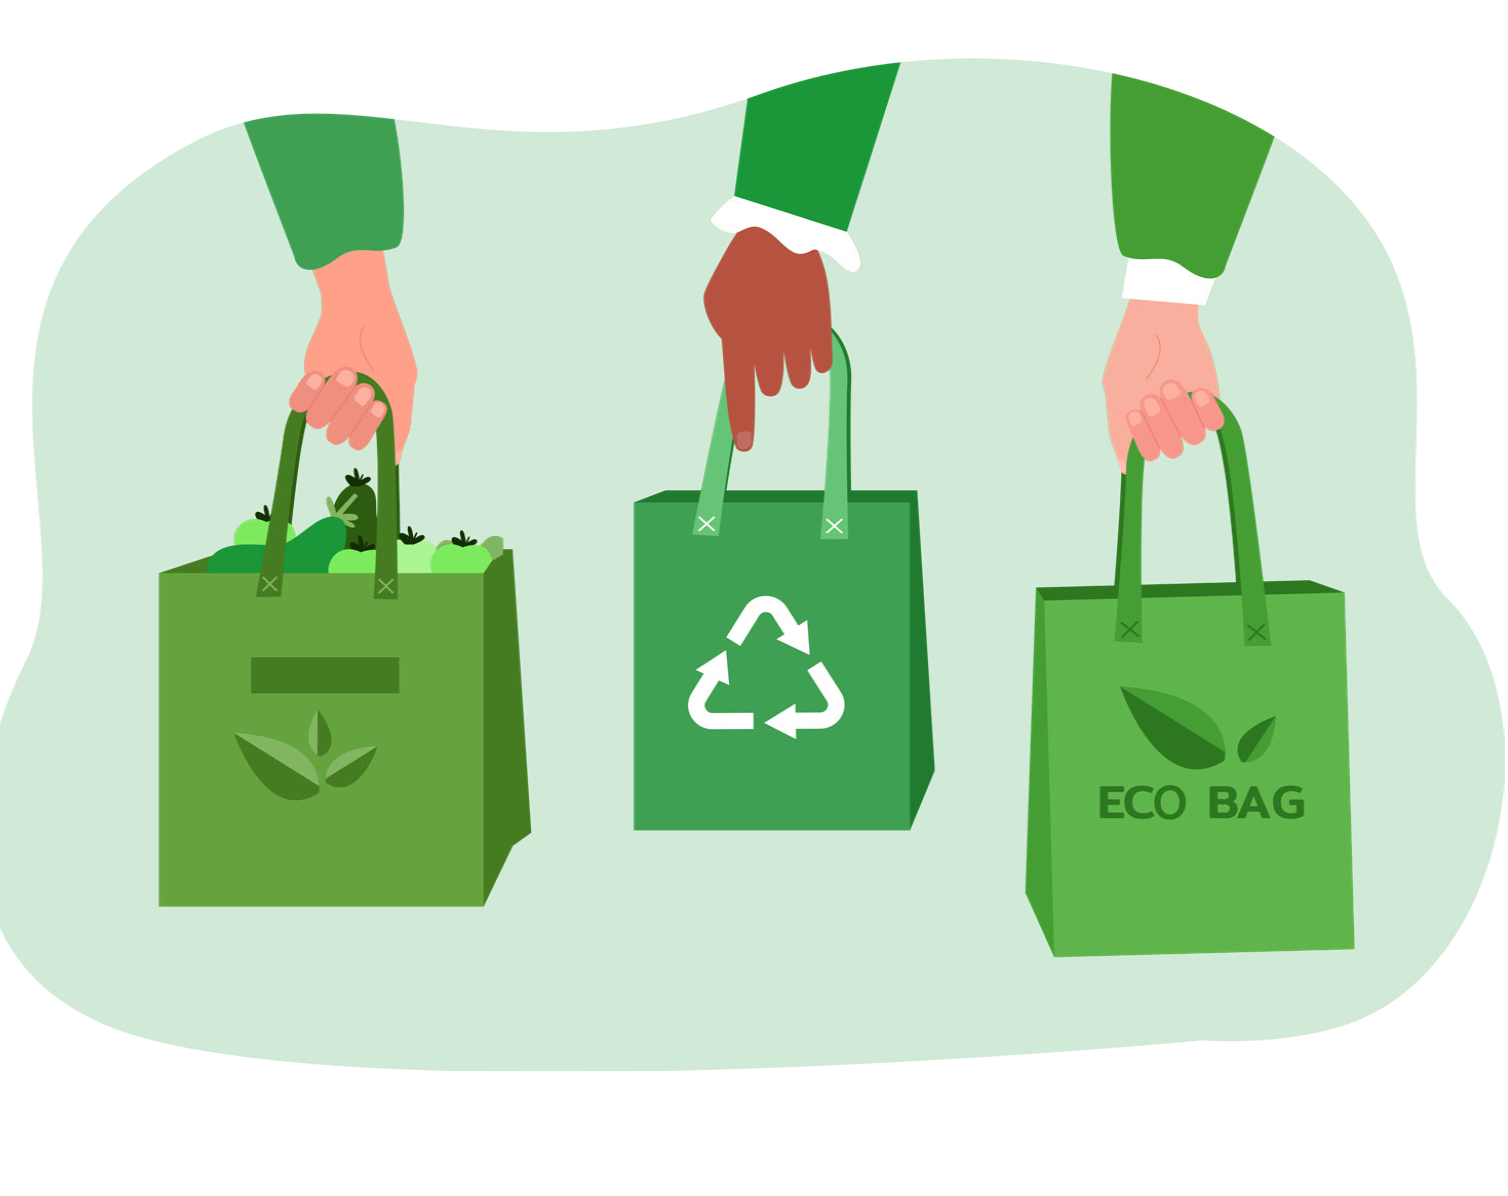 Article: Marketing Green Consumer